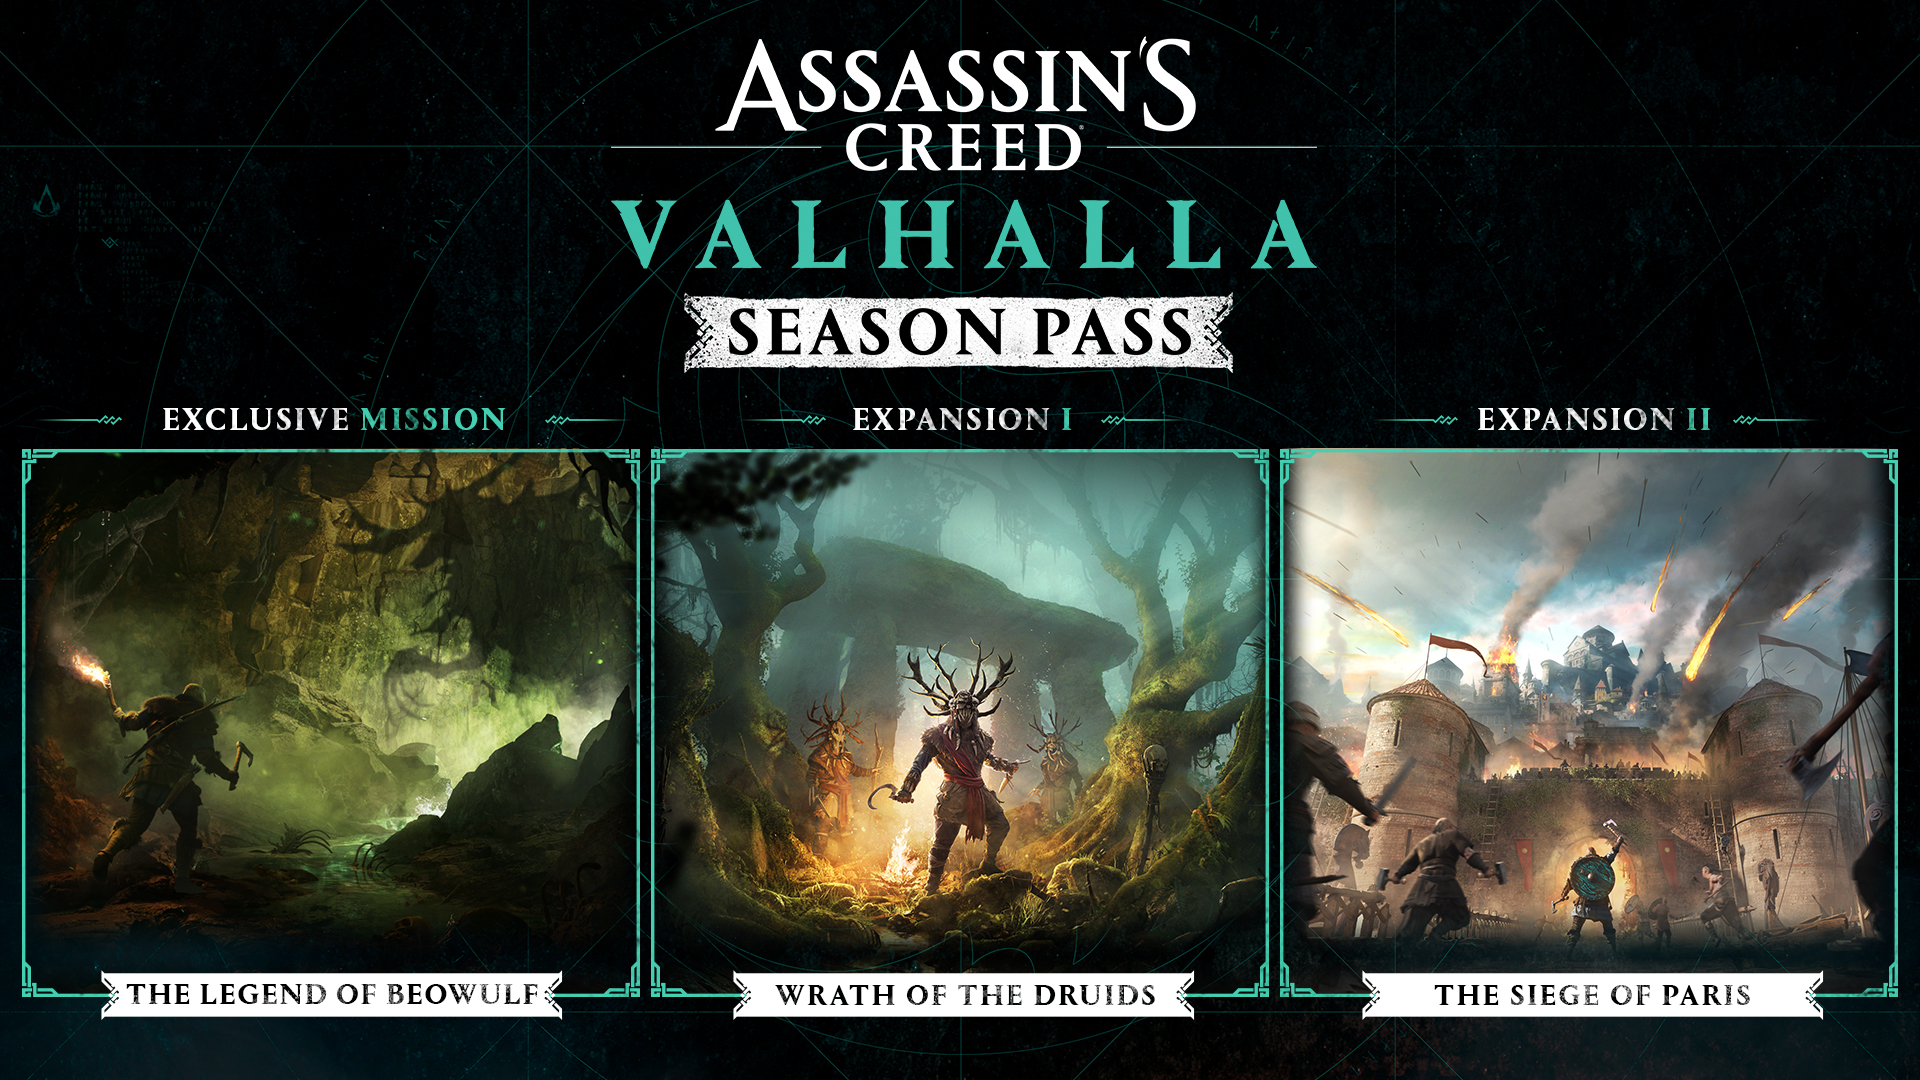 Assassin’s Creed Valhalla conținut suplimentar